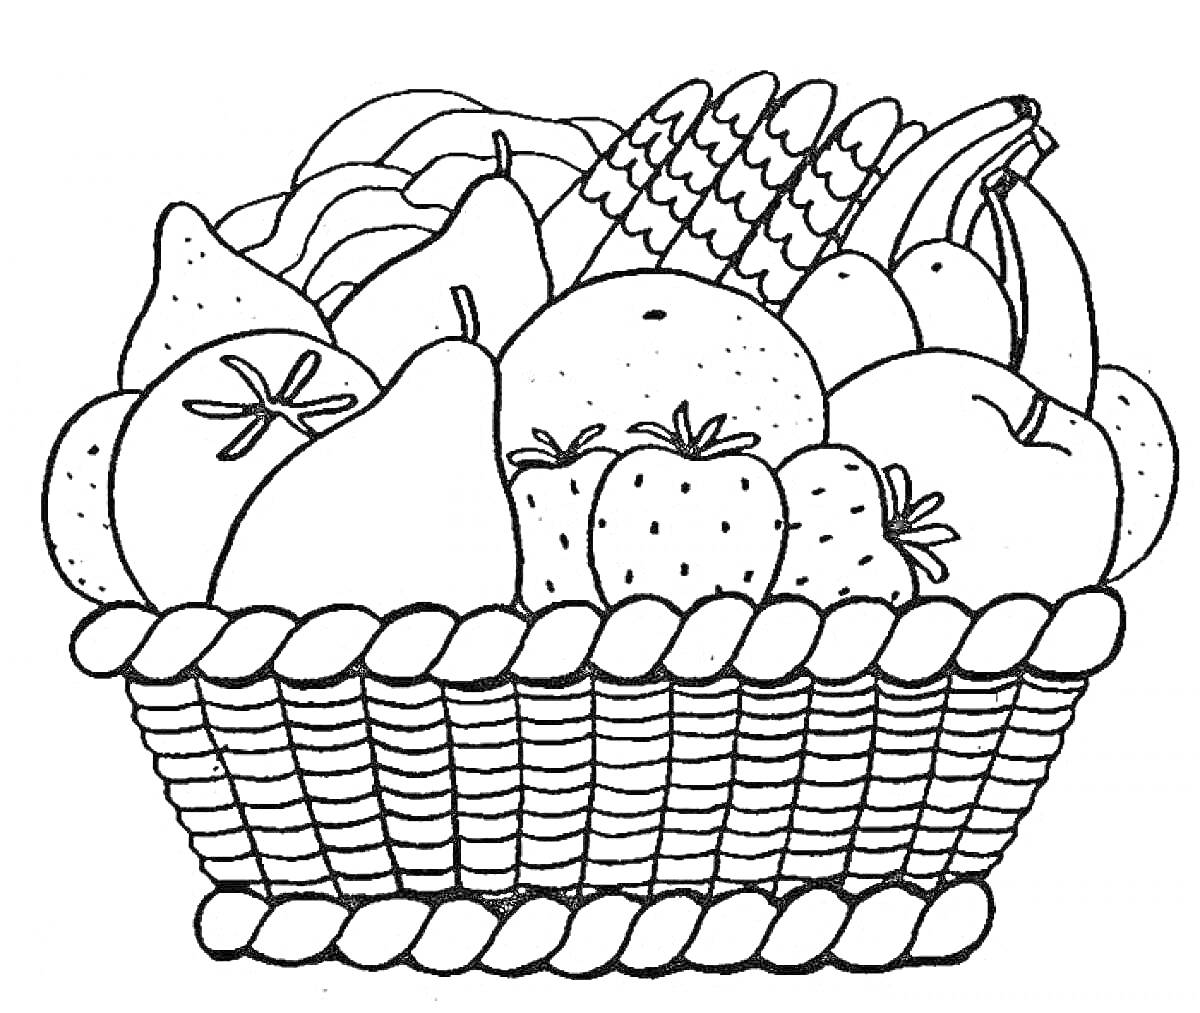 Раскраска Корзина с фруктами и овощами (груши, апельсин, арбуз, кукуруза, банан, клубника, яблоко, баклажан)